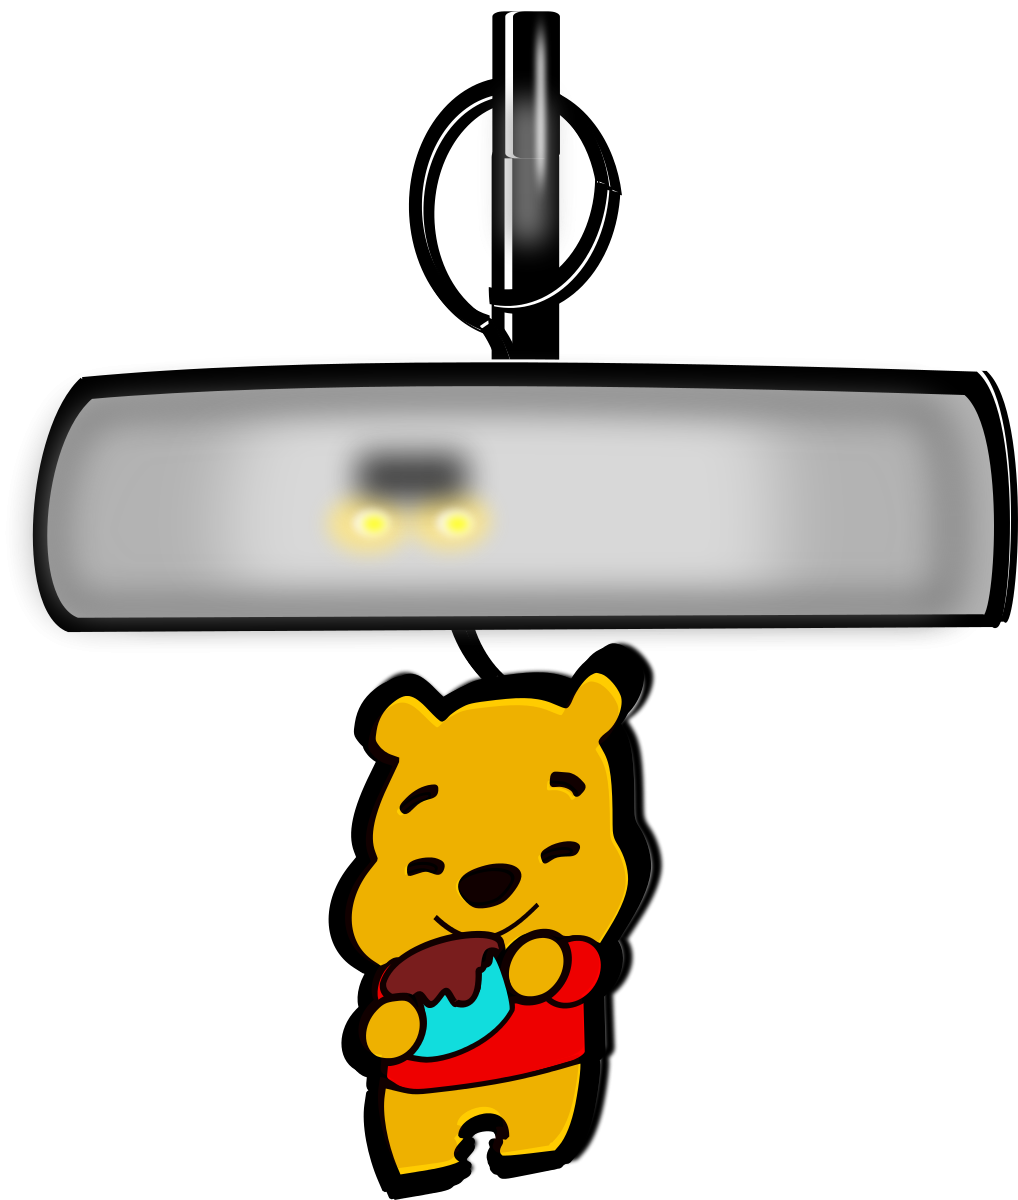 Winnie Pooh Air Freshener Clipart by inkscapeforum.it : Car ...